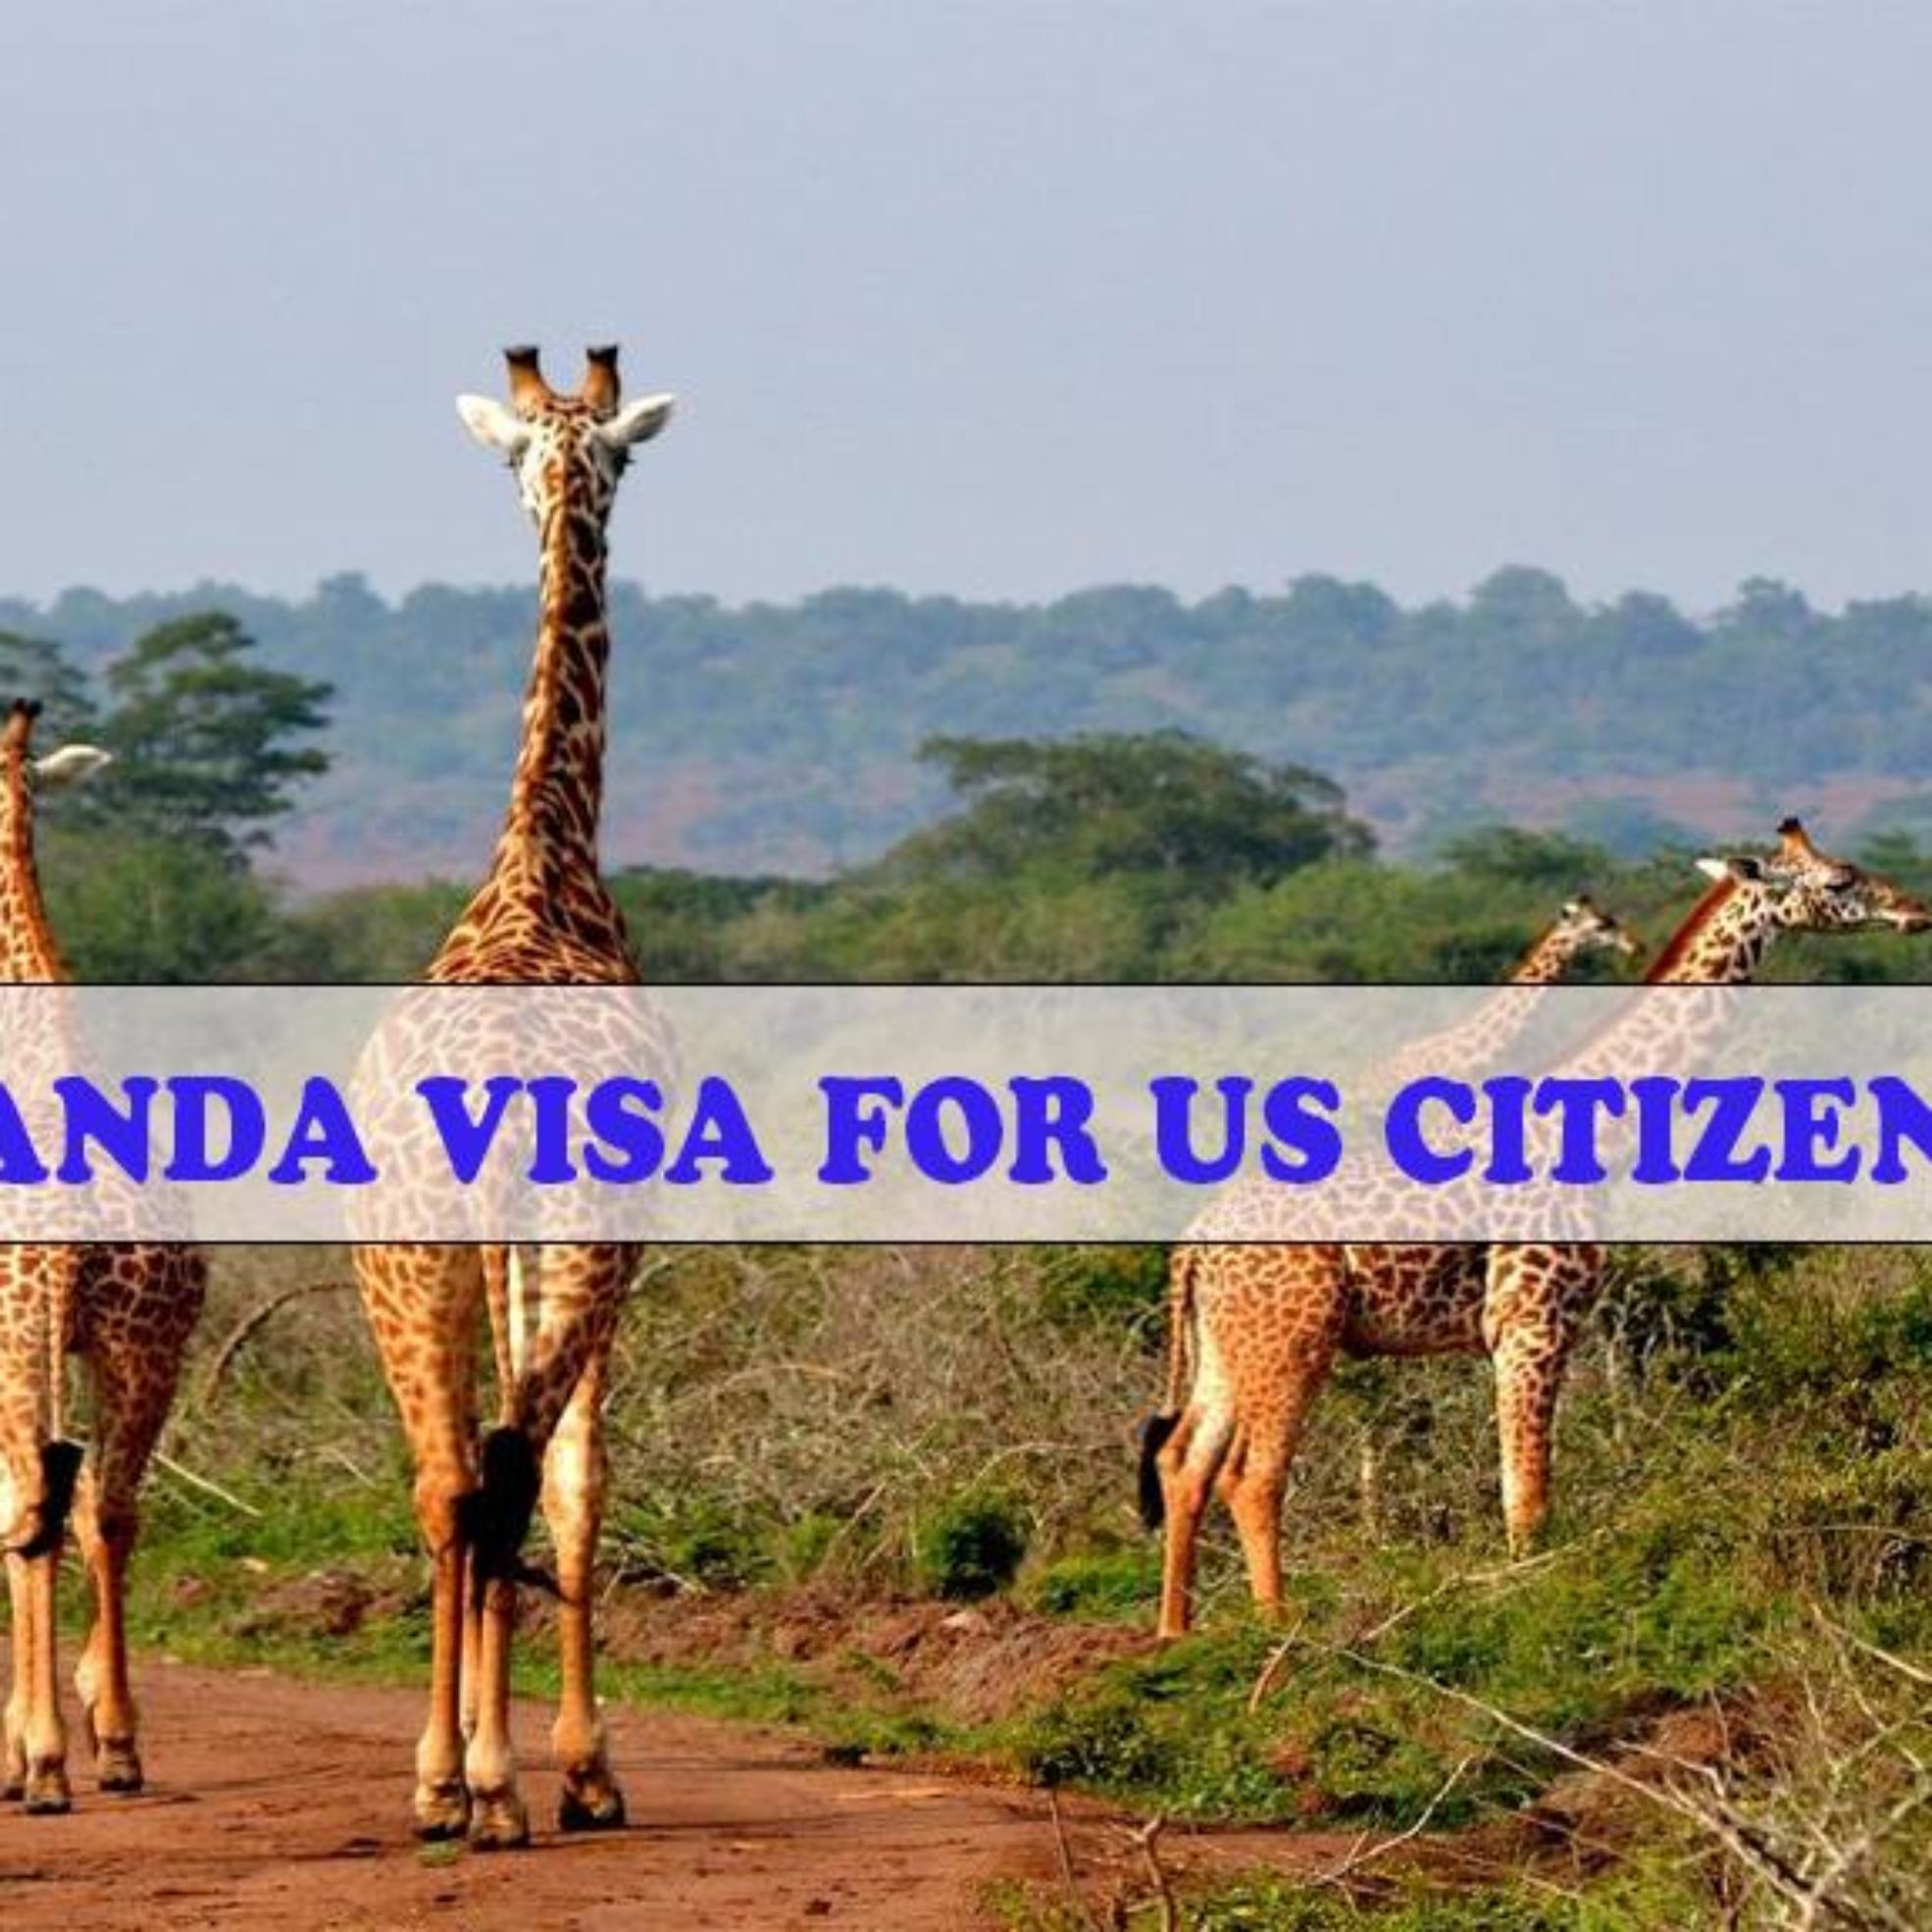 rwanda visa for us citizens